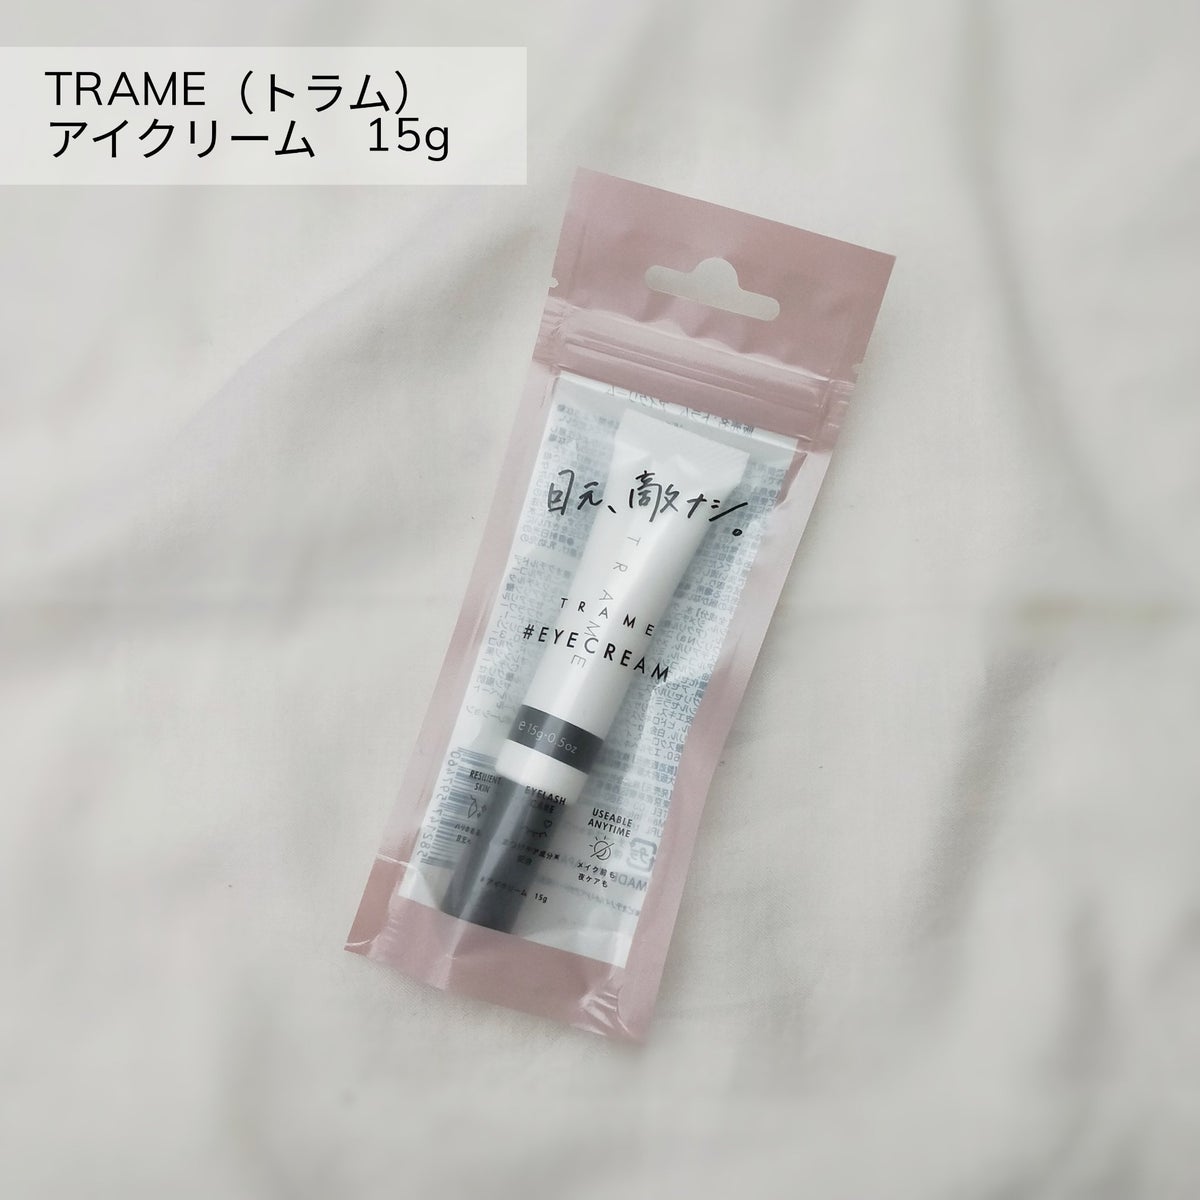 TRAME アイクリーム｜TRAMEの口コミ - TRAME アイクリーム 15g 2,200円